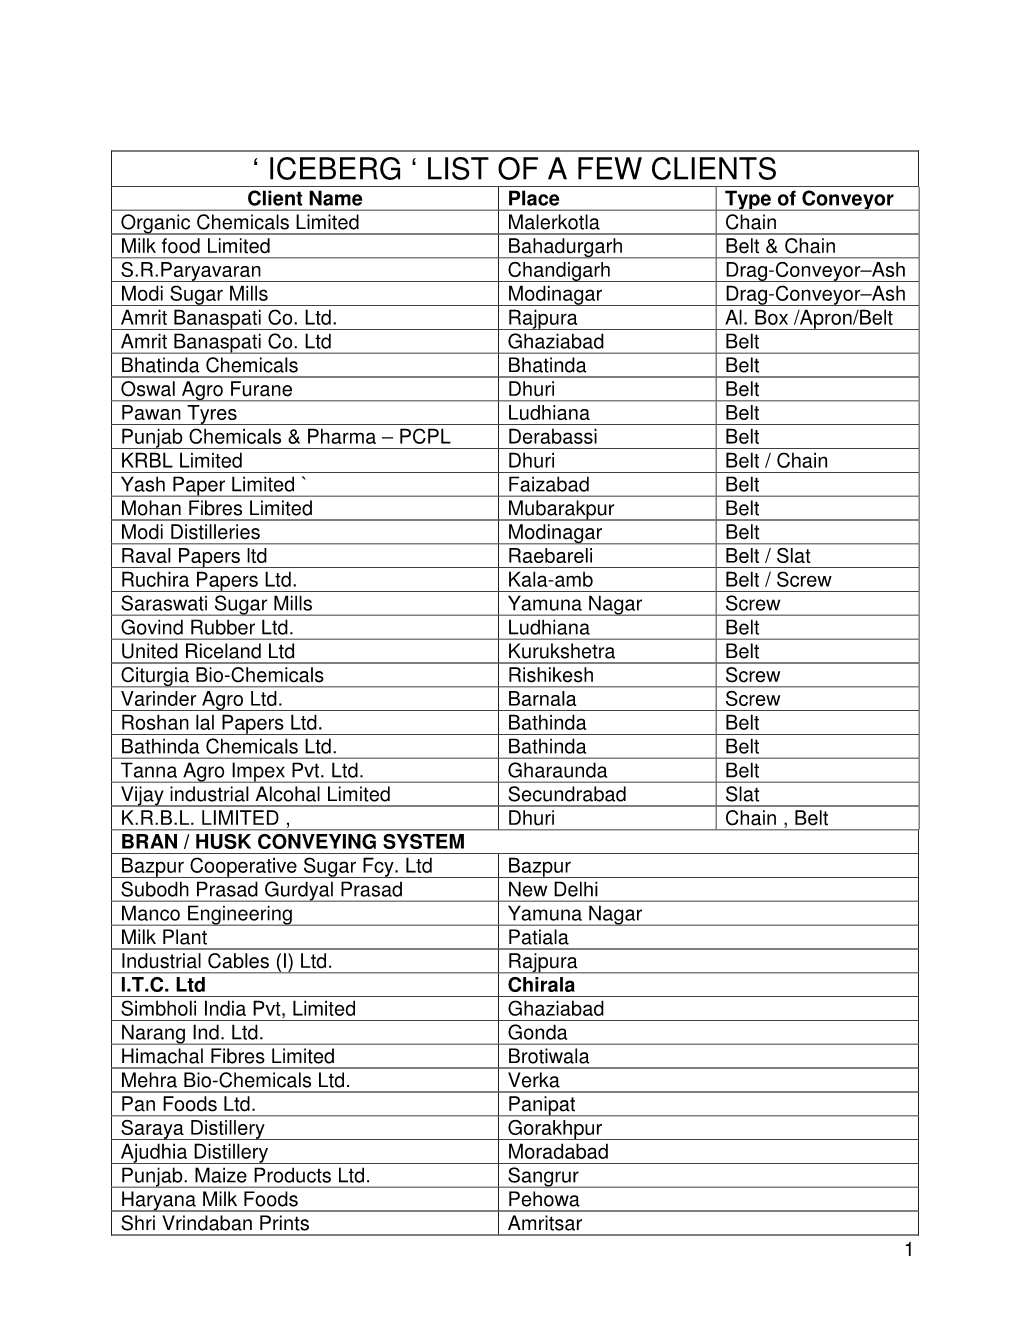 ' Iceberg ' List of a Few Clients